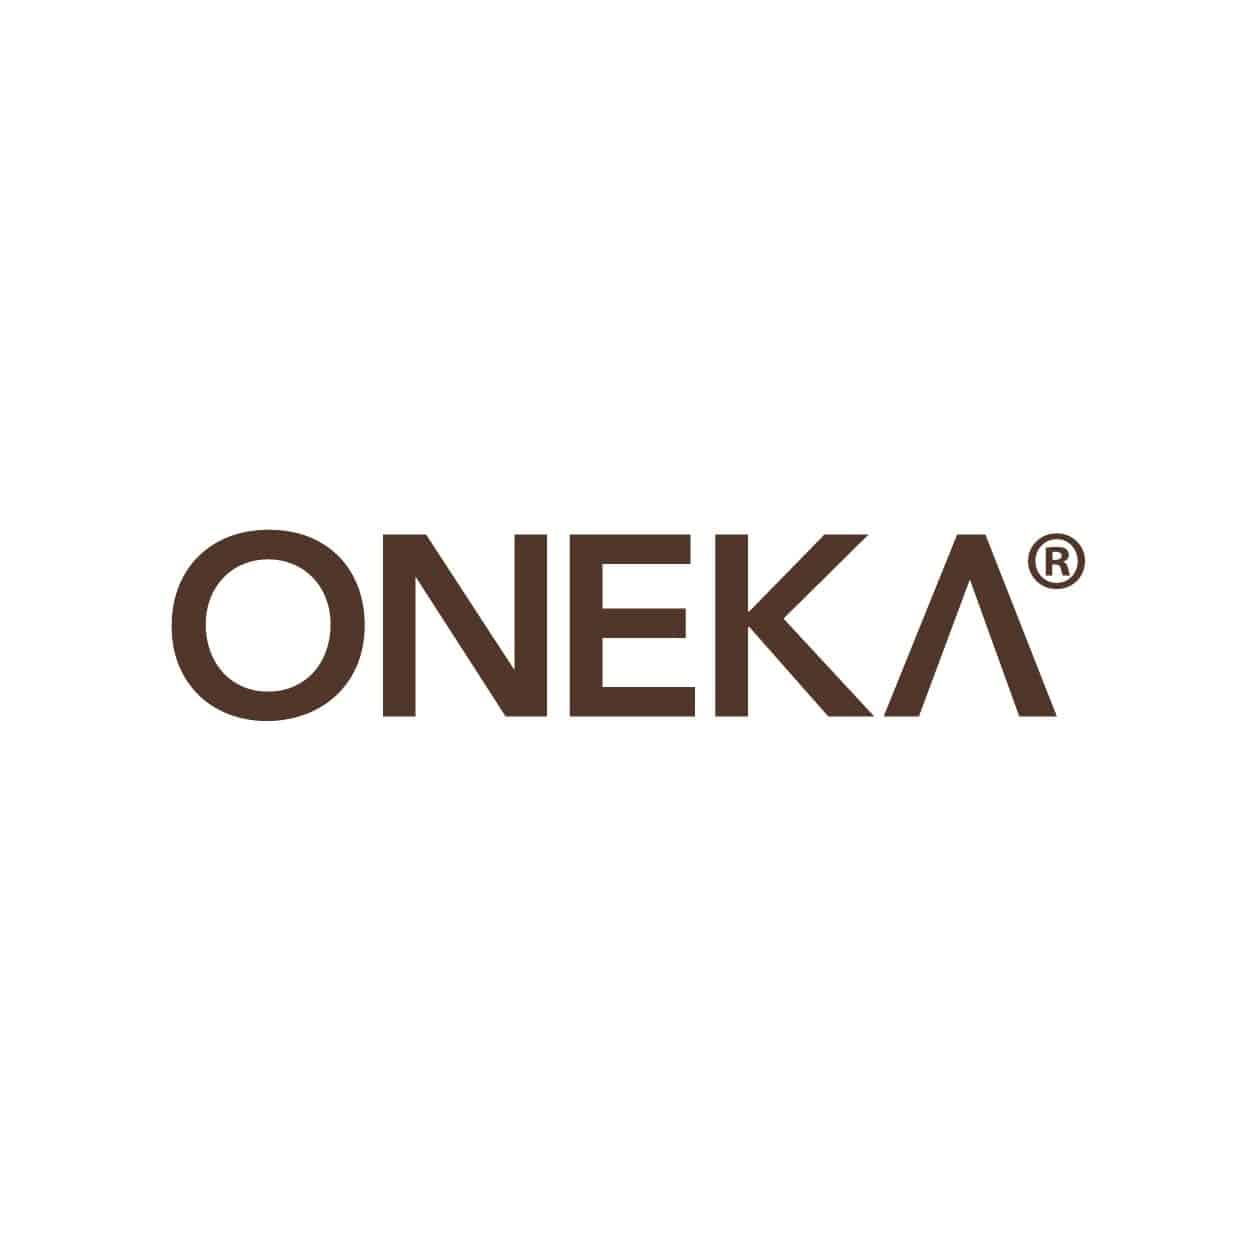 Oneka brand logo